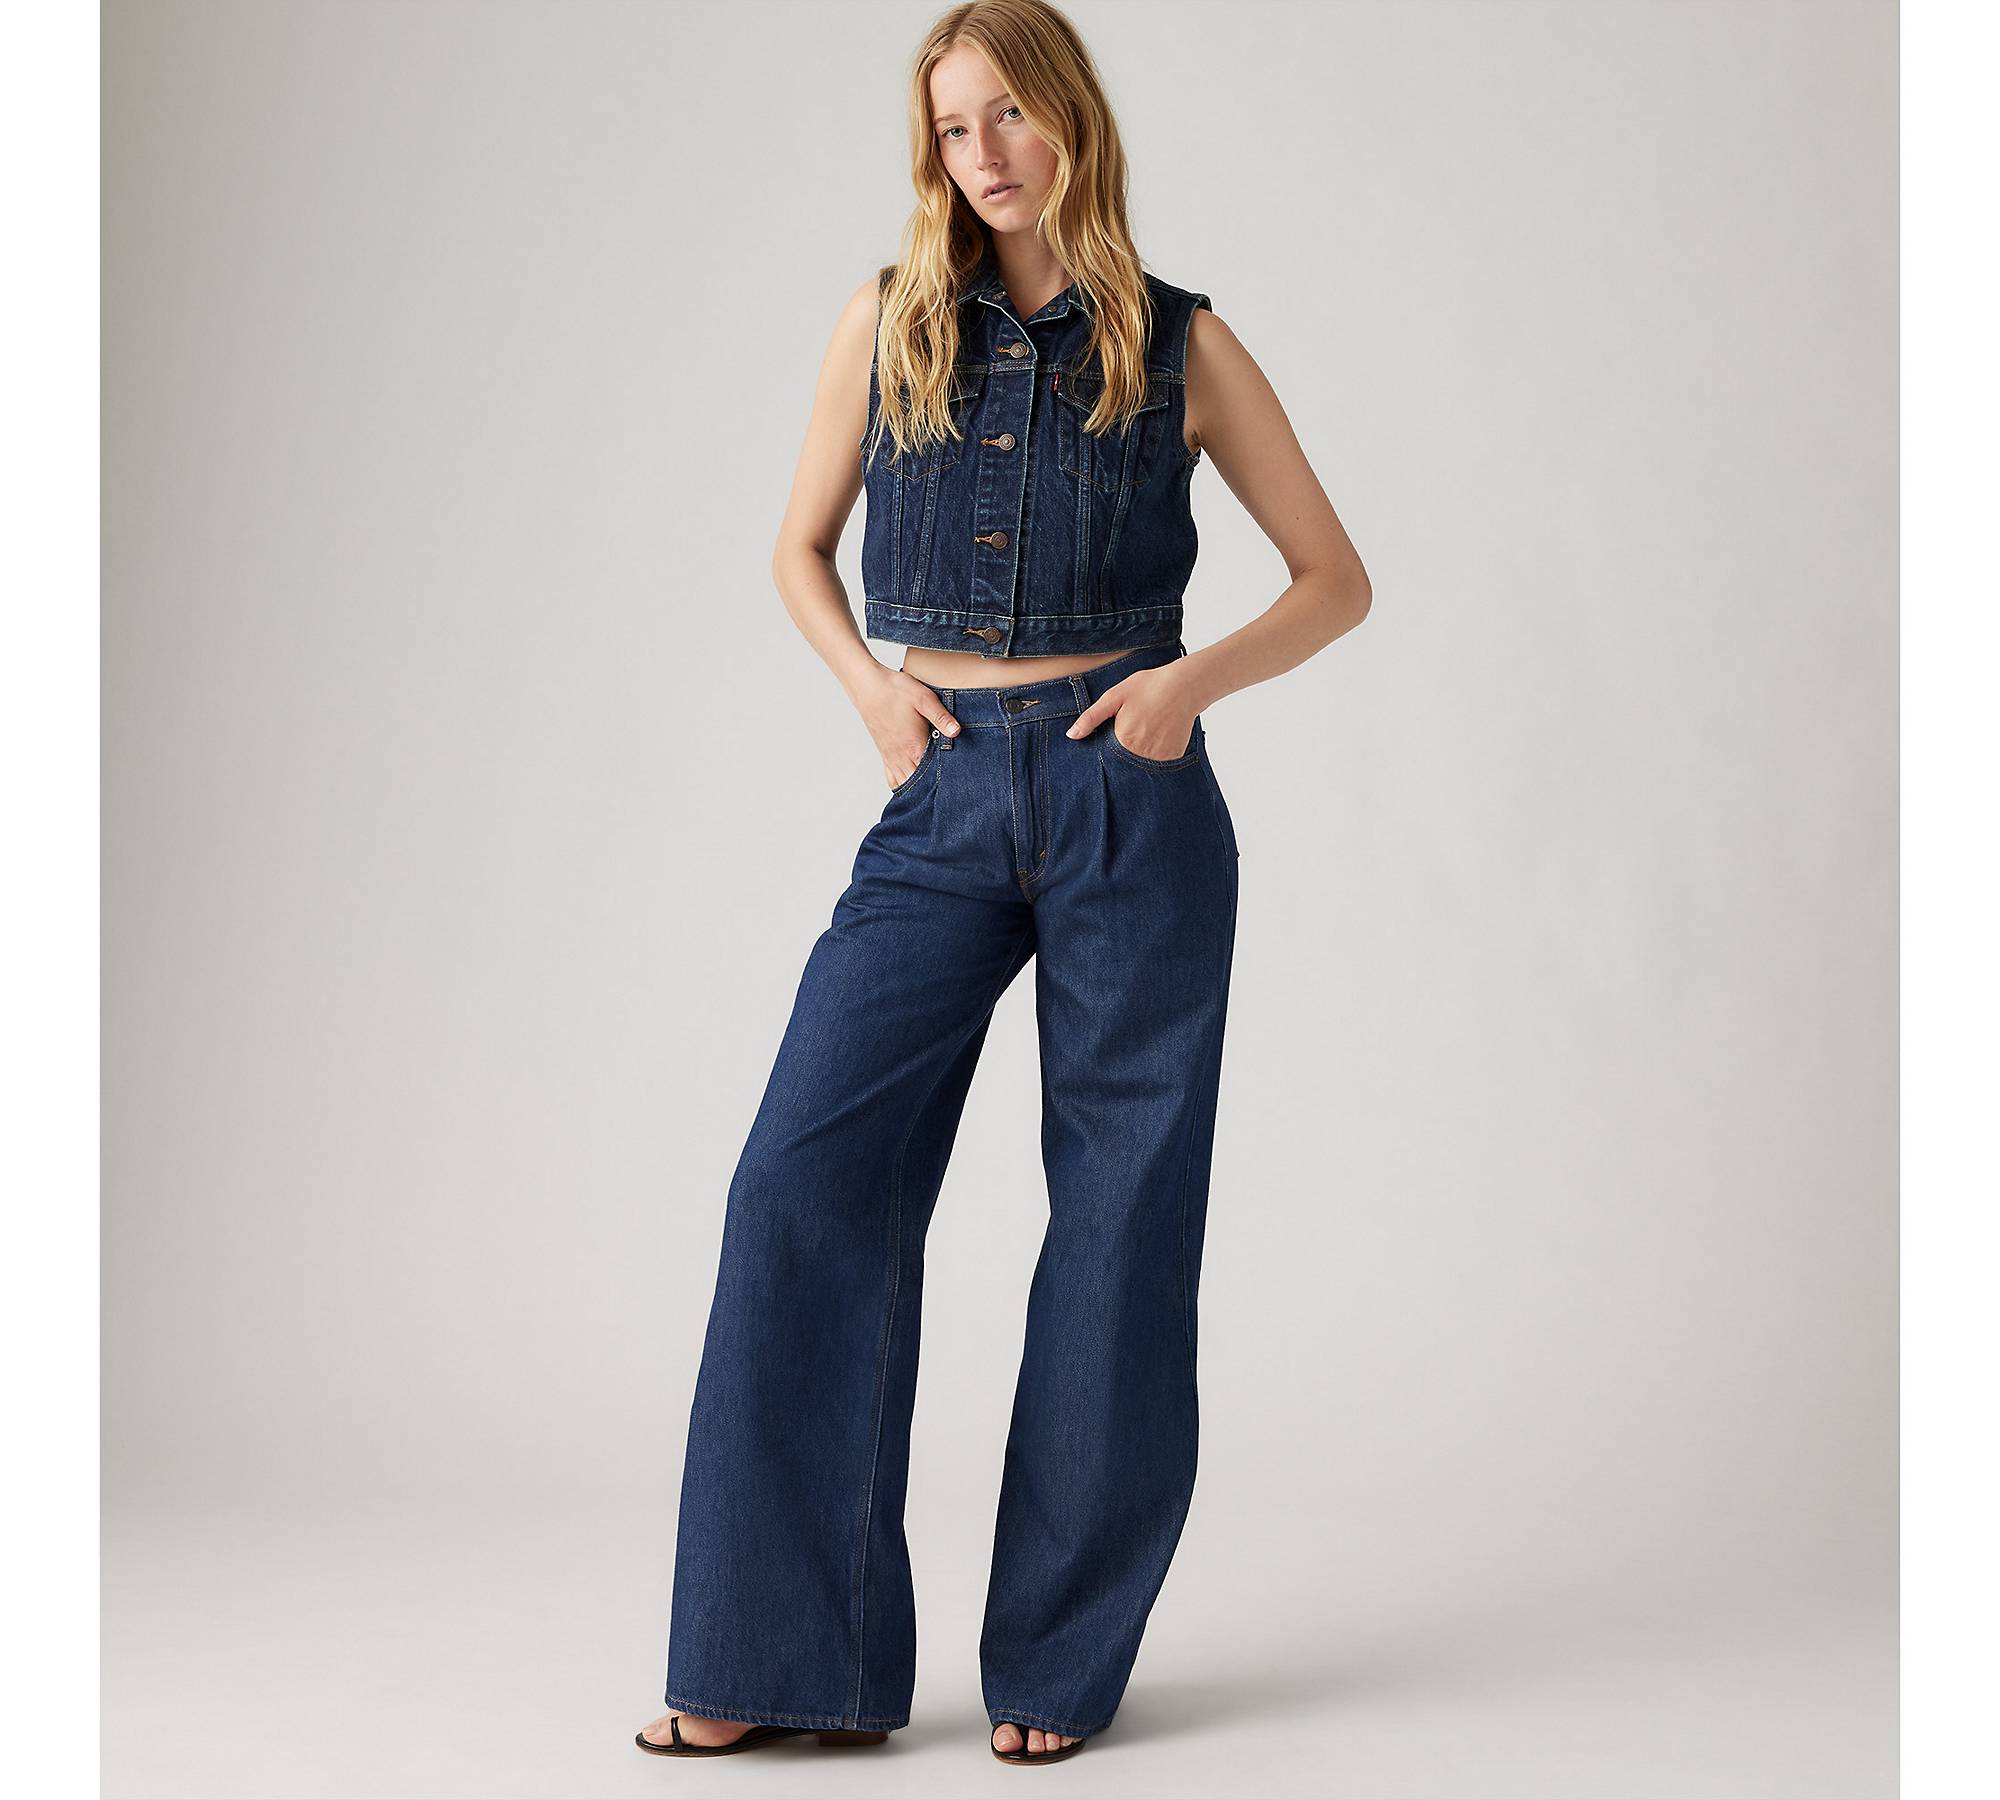  Trouser - Women's Jeans / Women's Clothing: Clothing